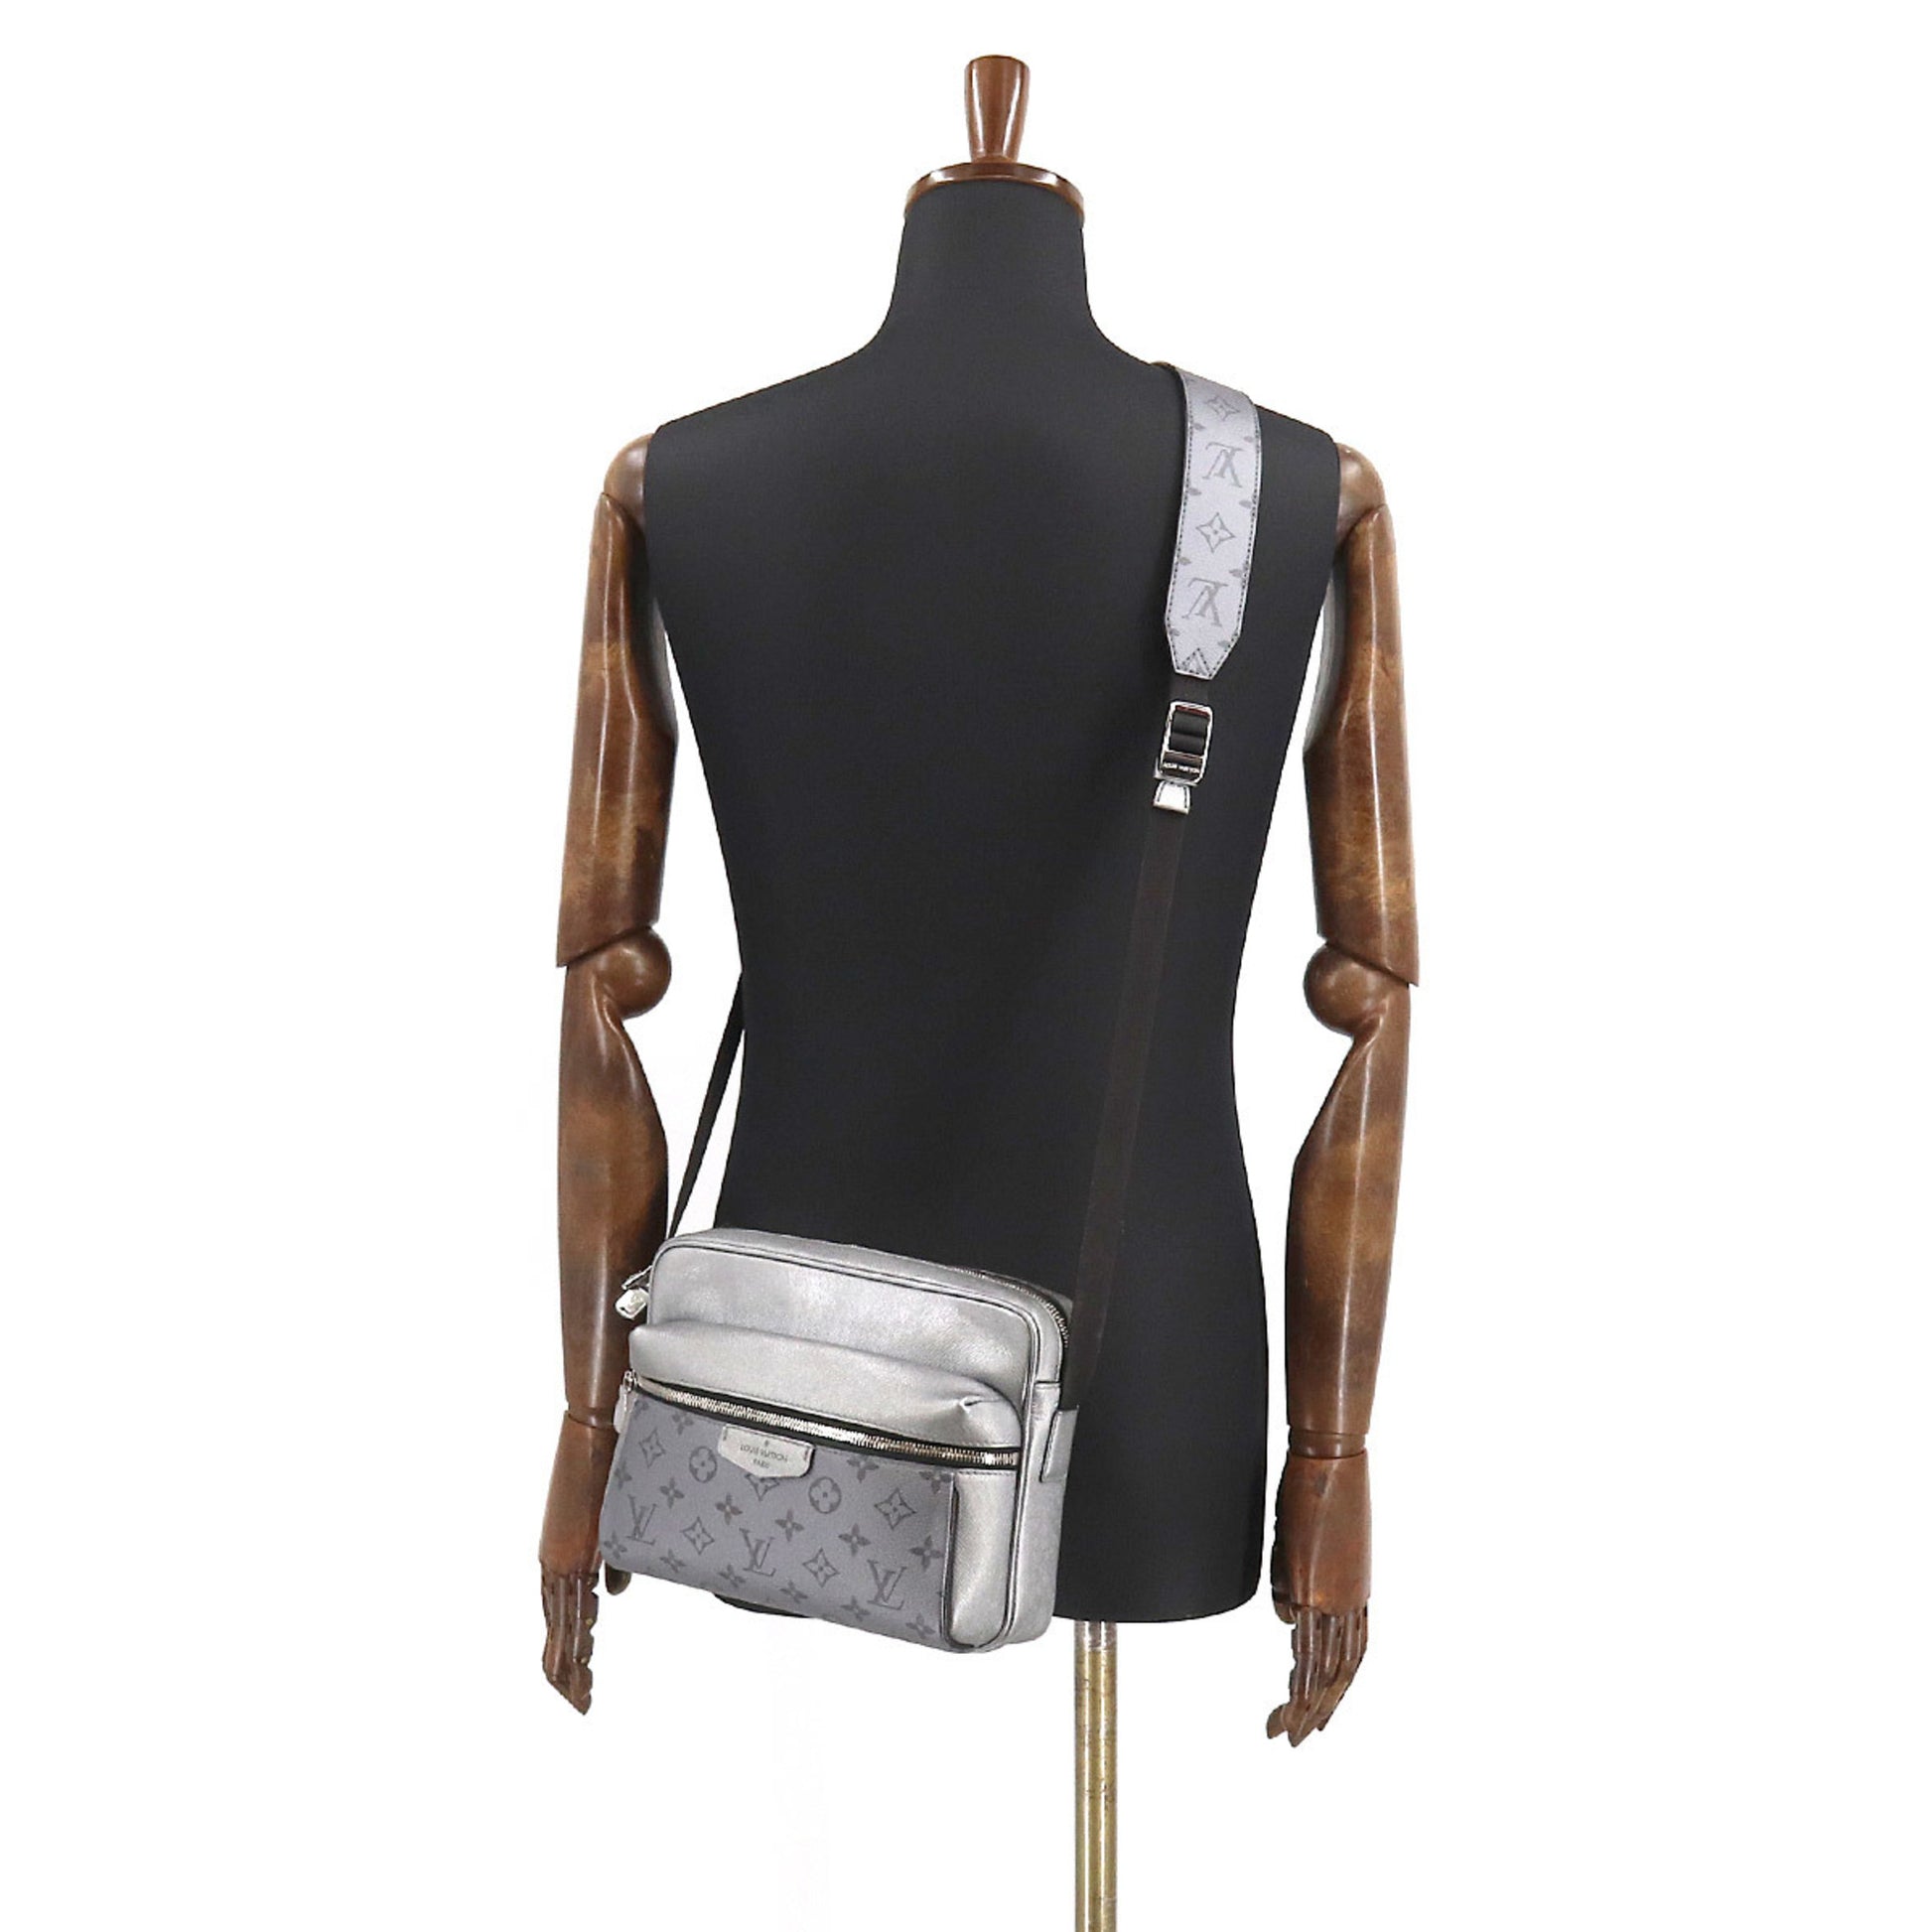 Louis Vuitton Taigarama Outdoor Messenger PM Shoulder Bag Silver M3083